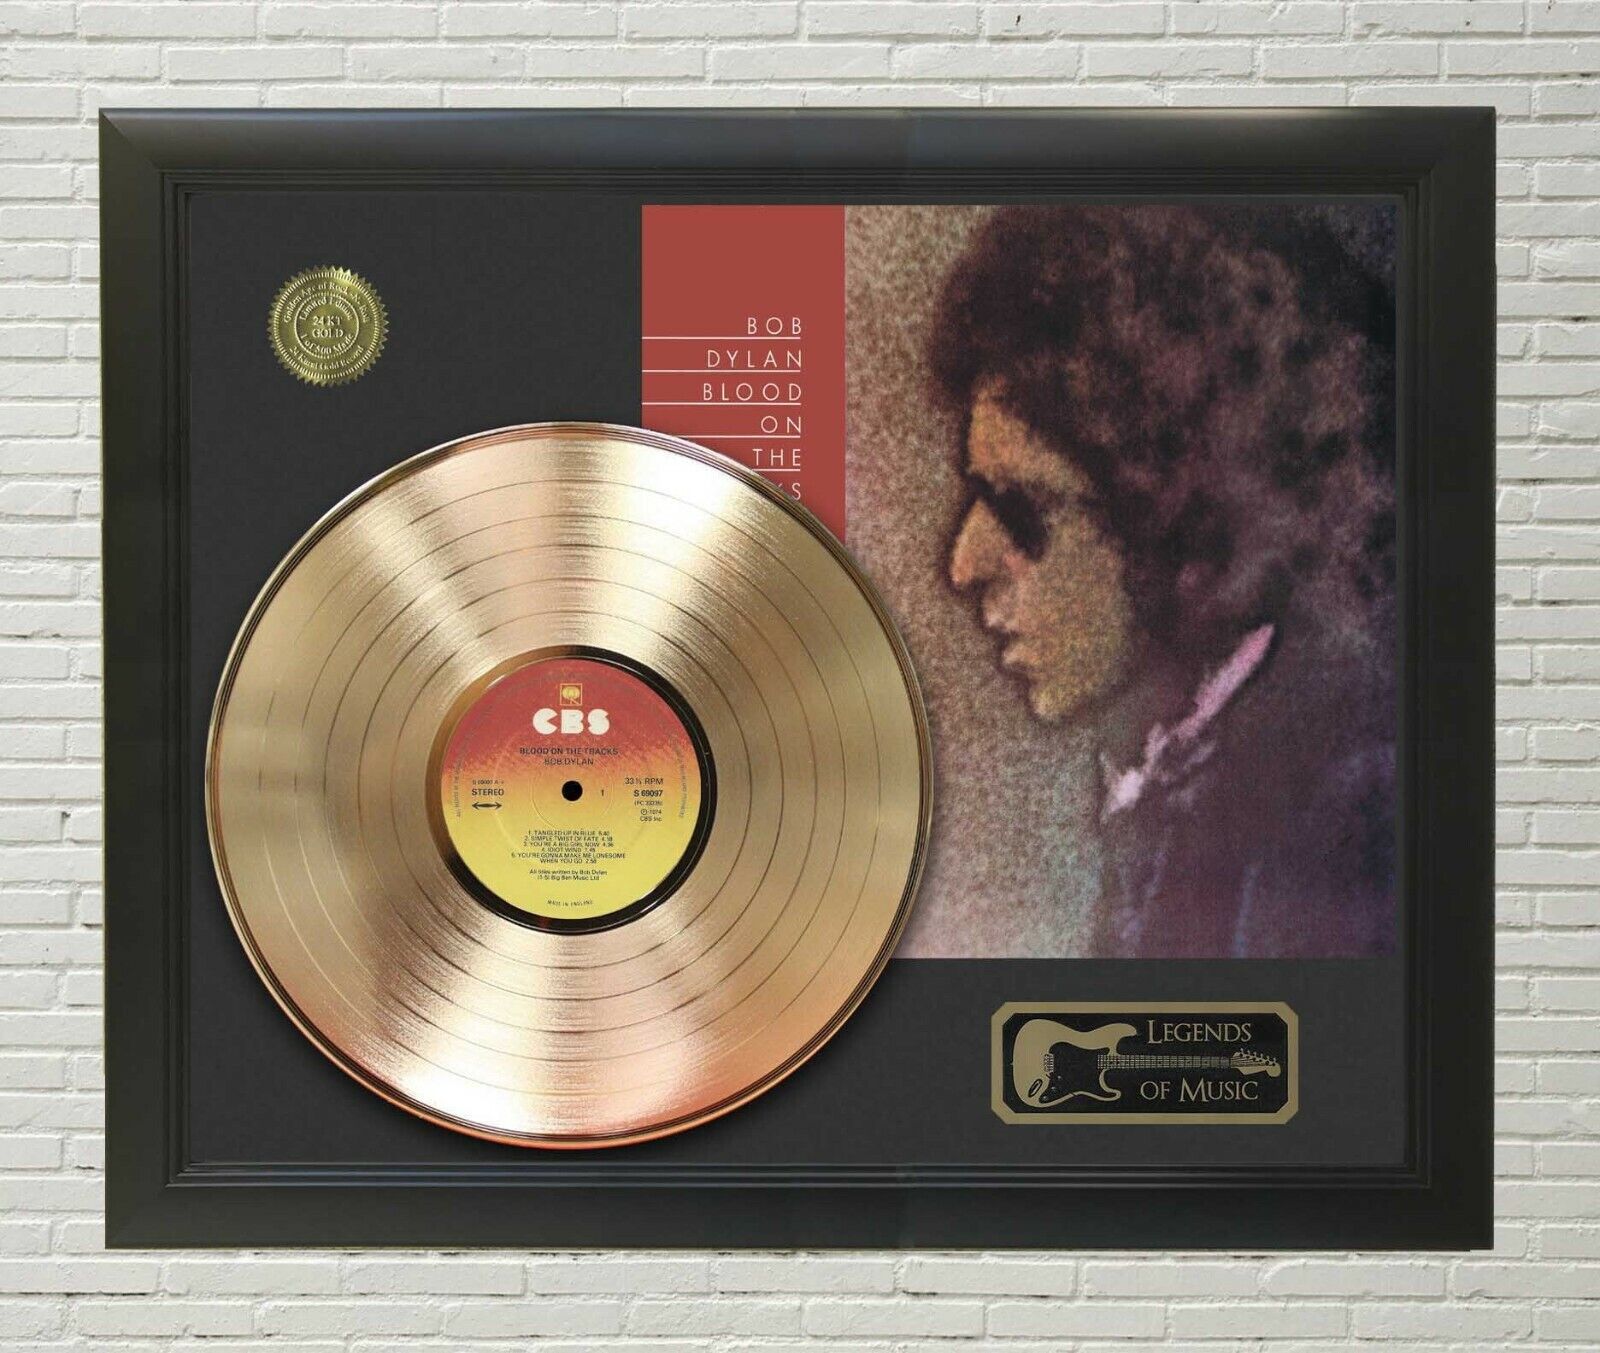 Bob Dylan Framed Wood Legends Of Music Lp Record Display. "c3"